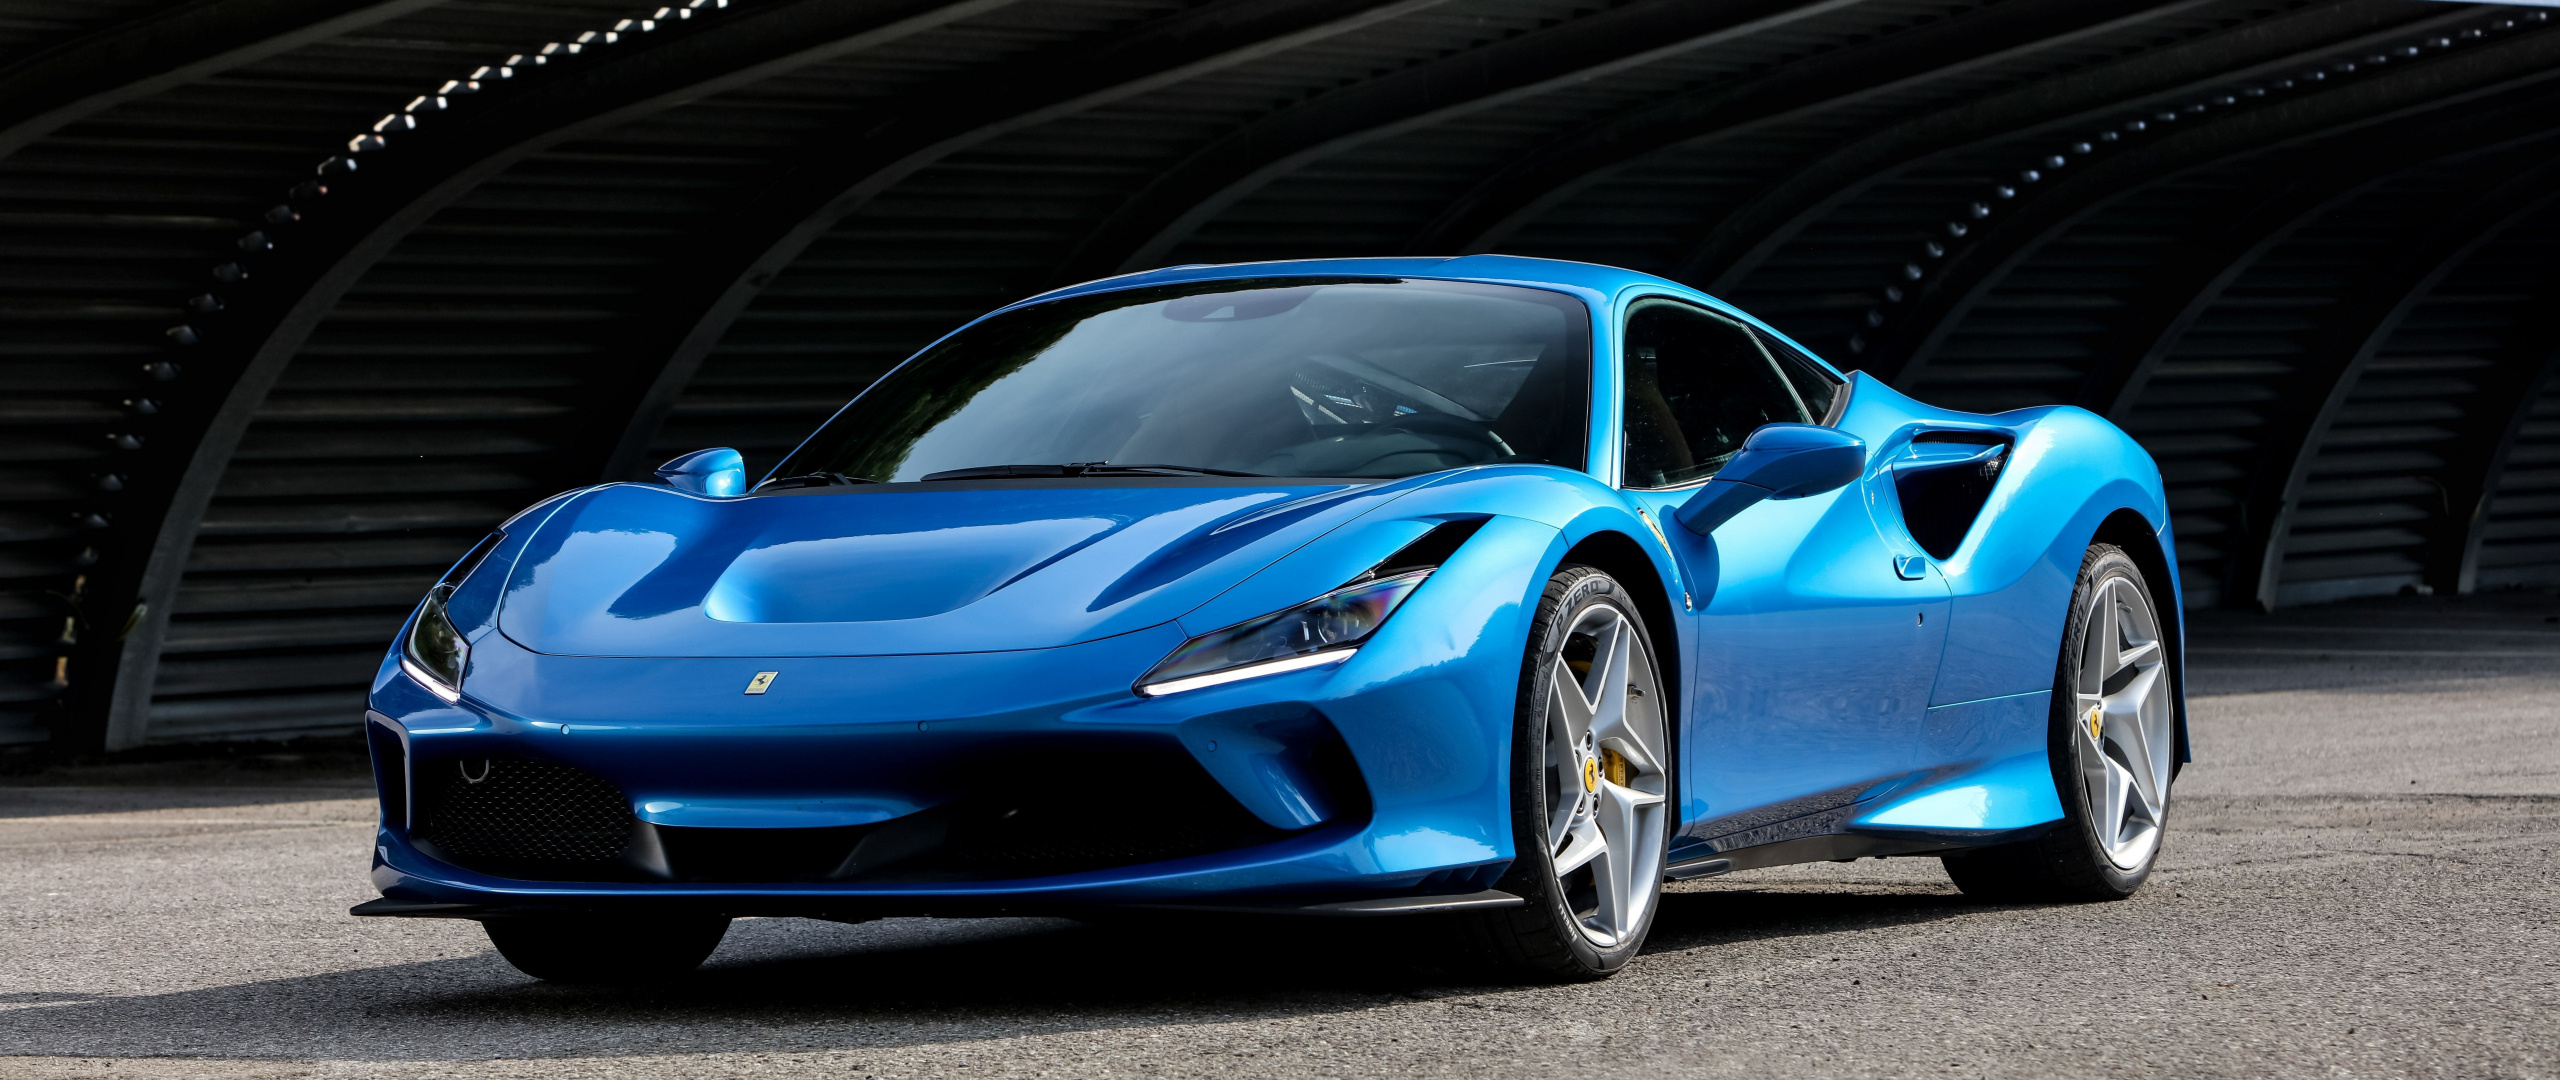 Ferrari F8, Blue Ferrari F8 Tributo, Dual wide HD image background, Auto, 2560x1080 Dual Screen Desktop